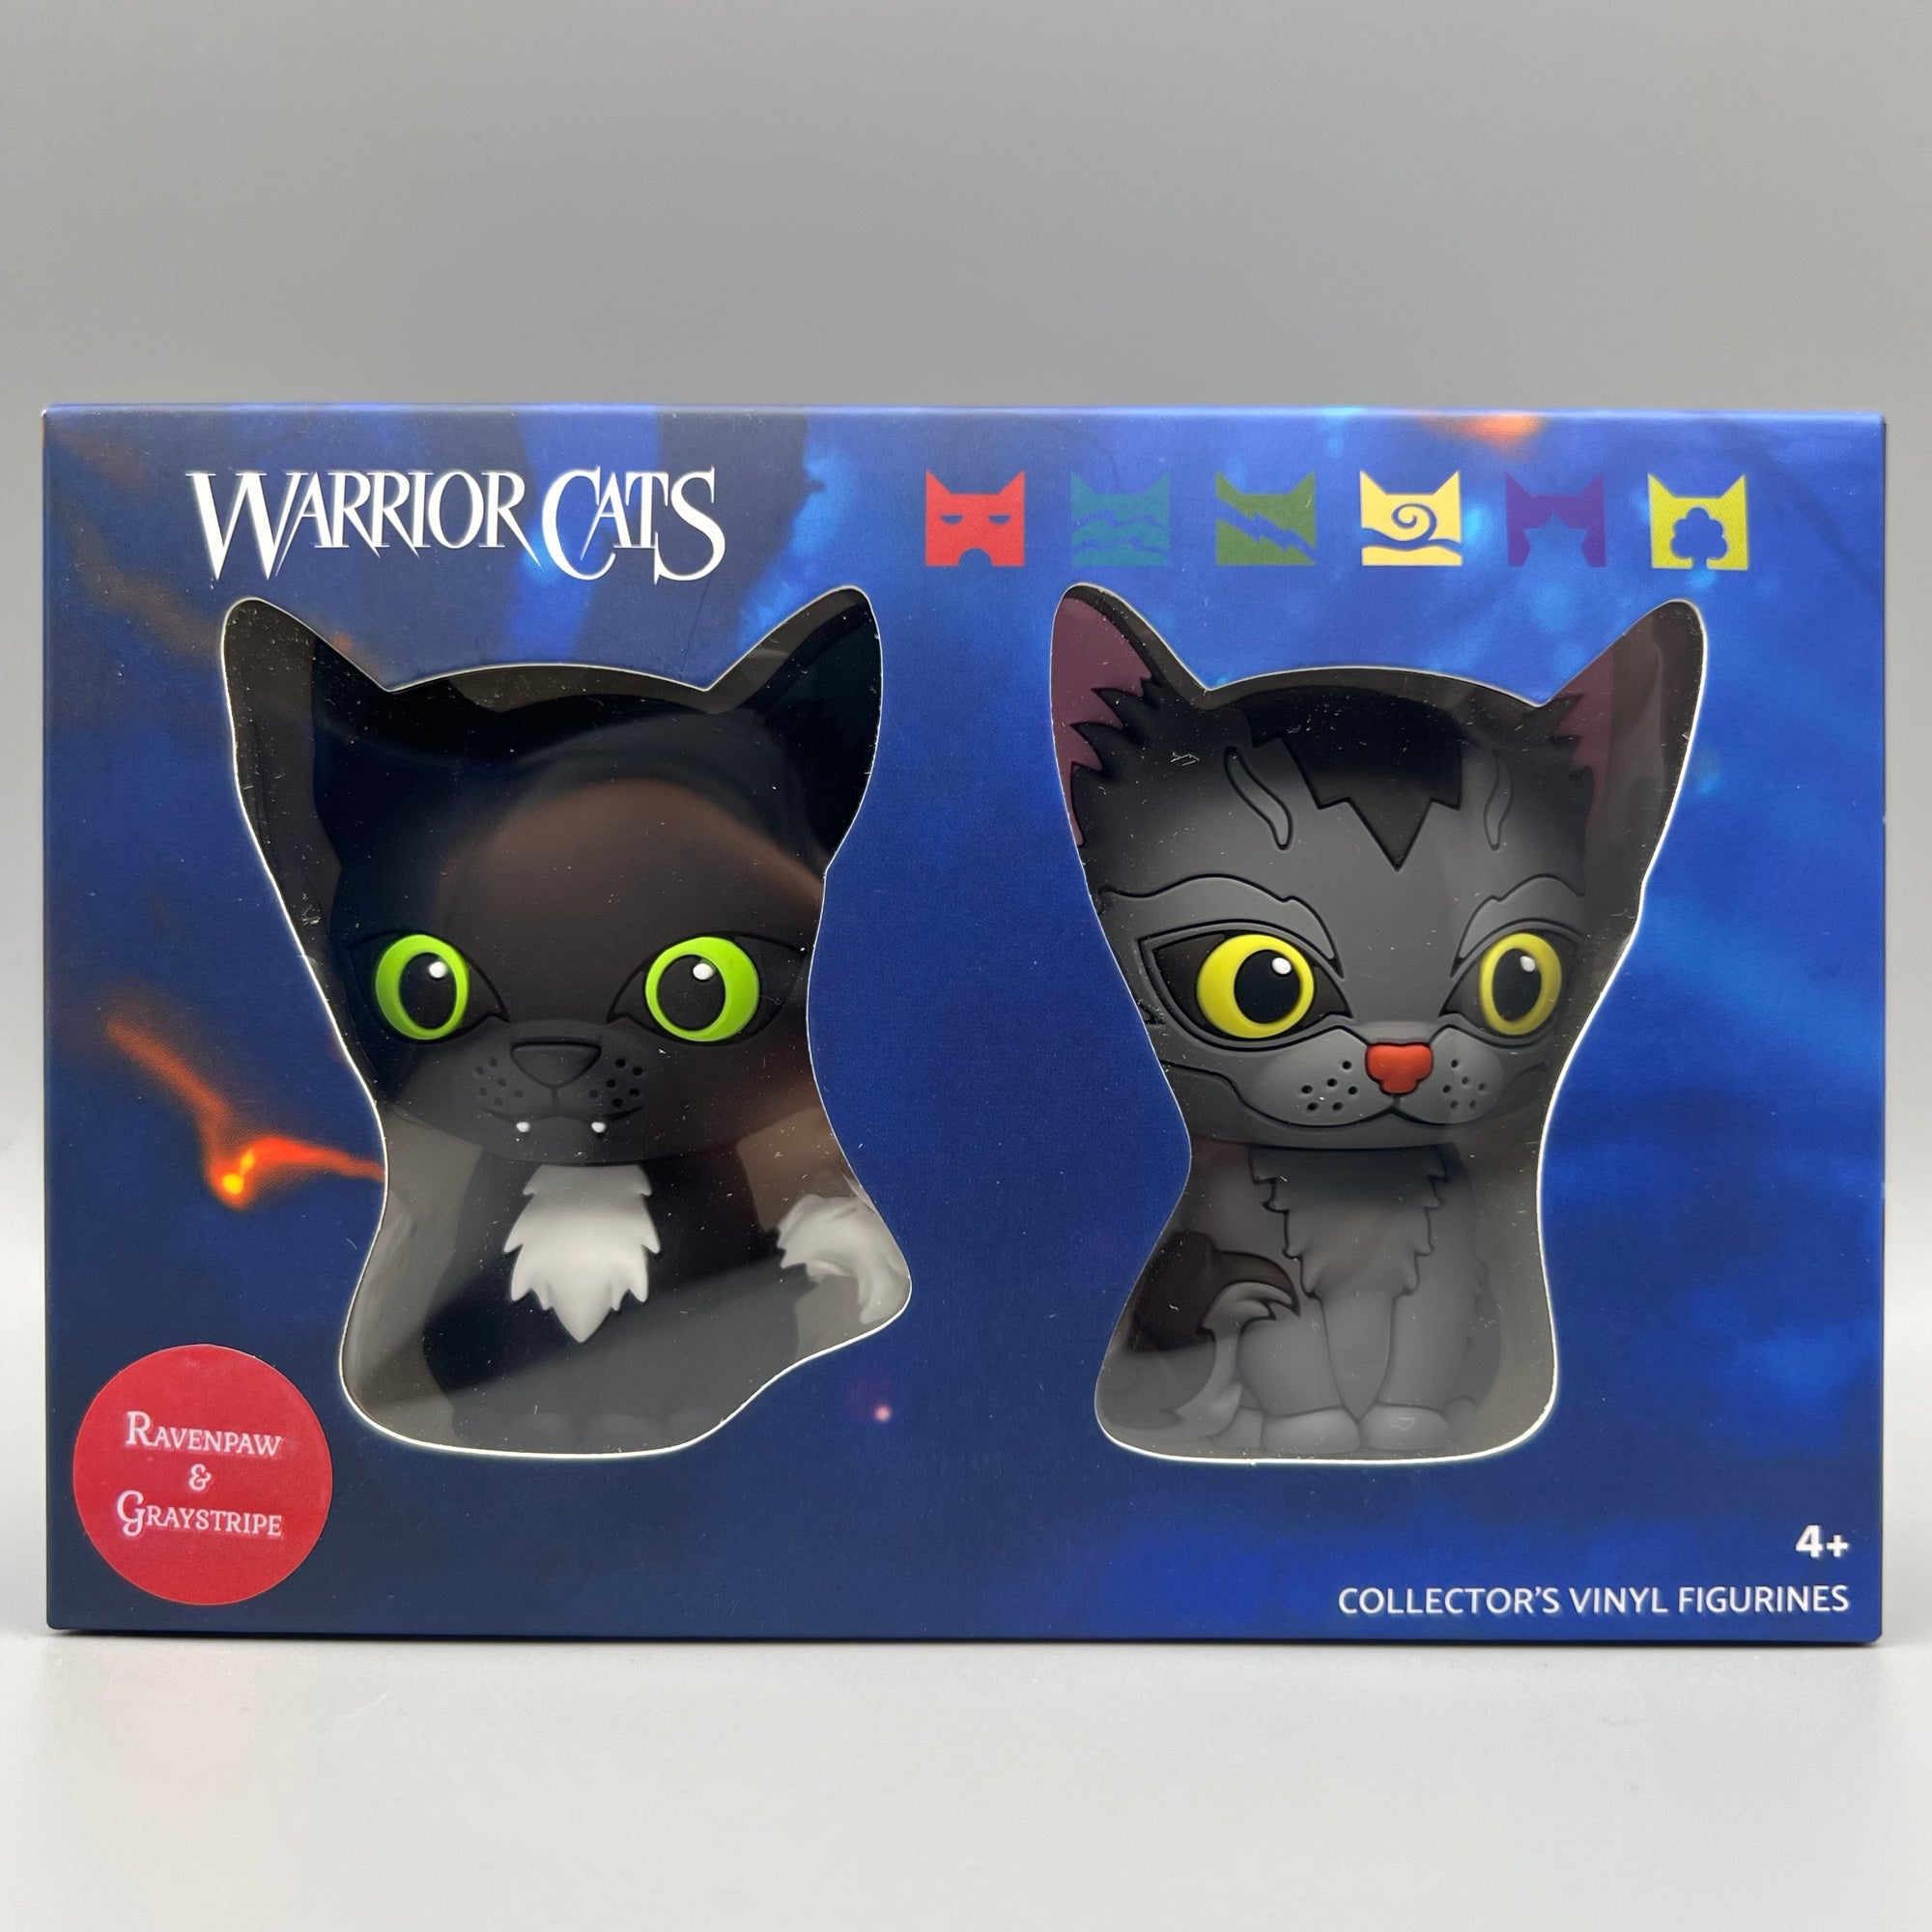 Our Work - Warrior Cats Website